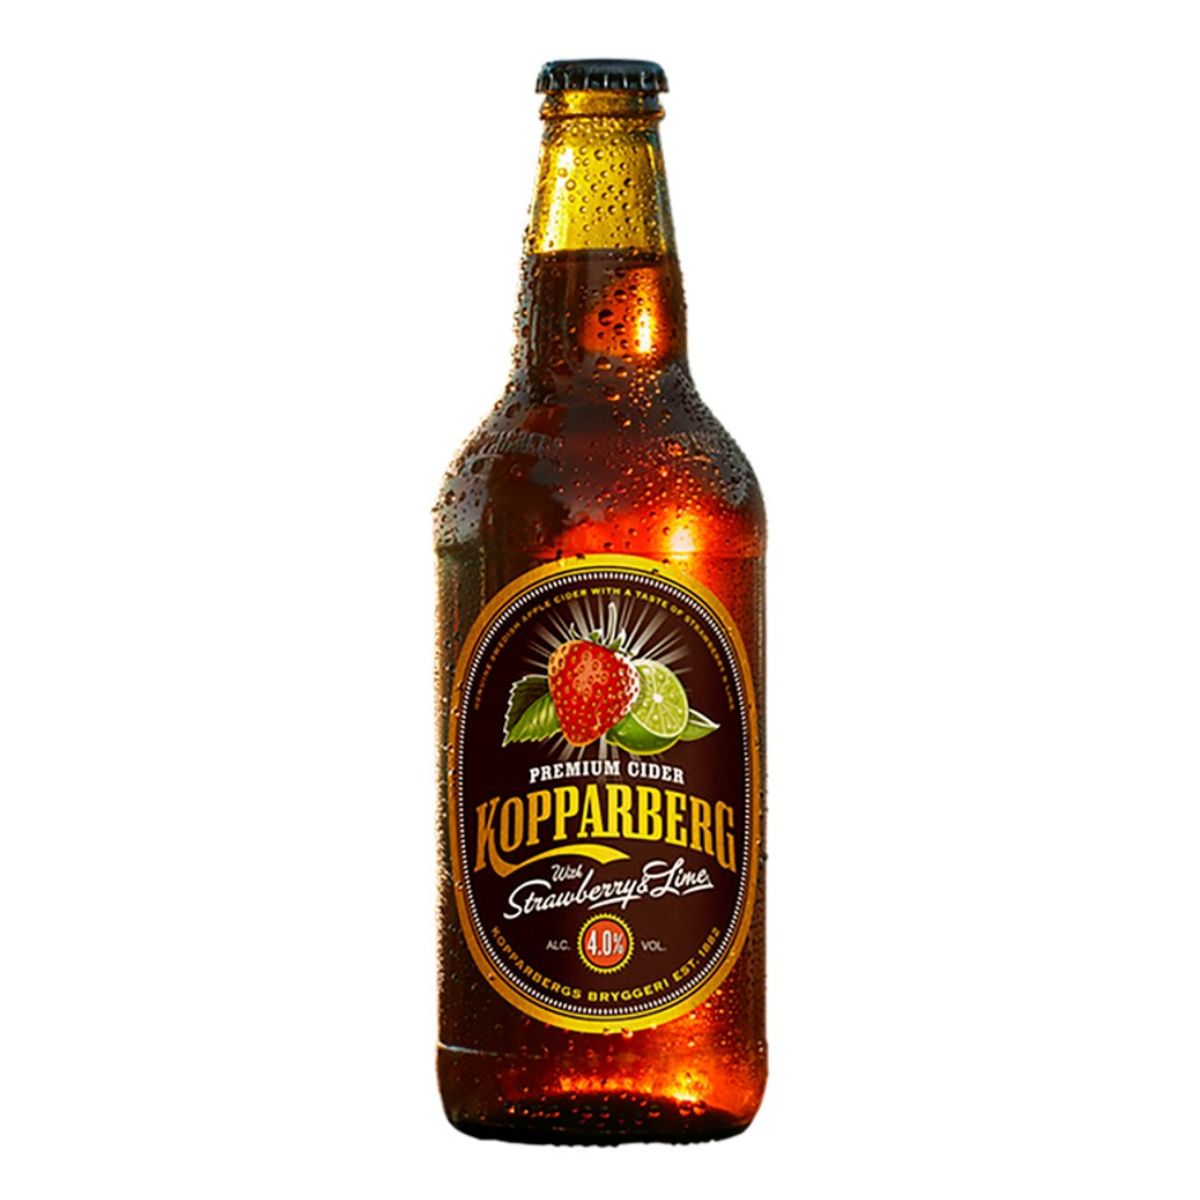 A bottle of Kopparberg - Premium Cider Strawberry & Lime (4.0% ABV) - 500ml on a white background.